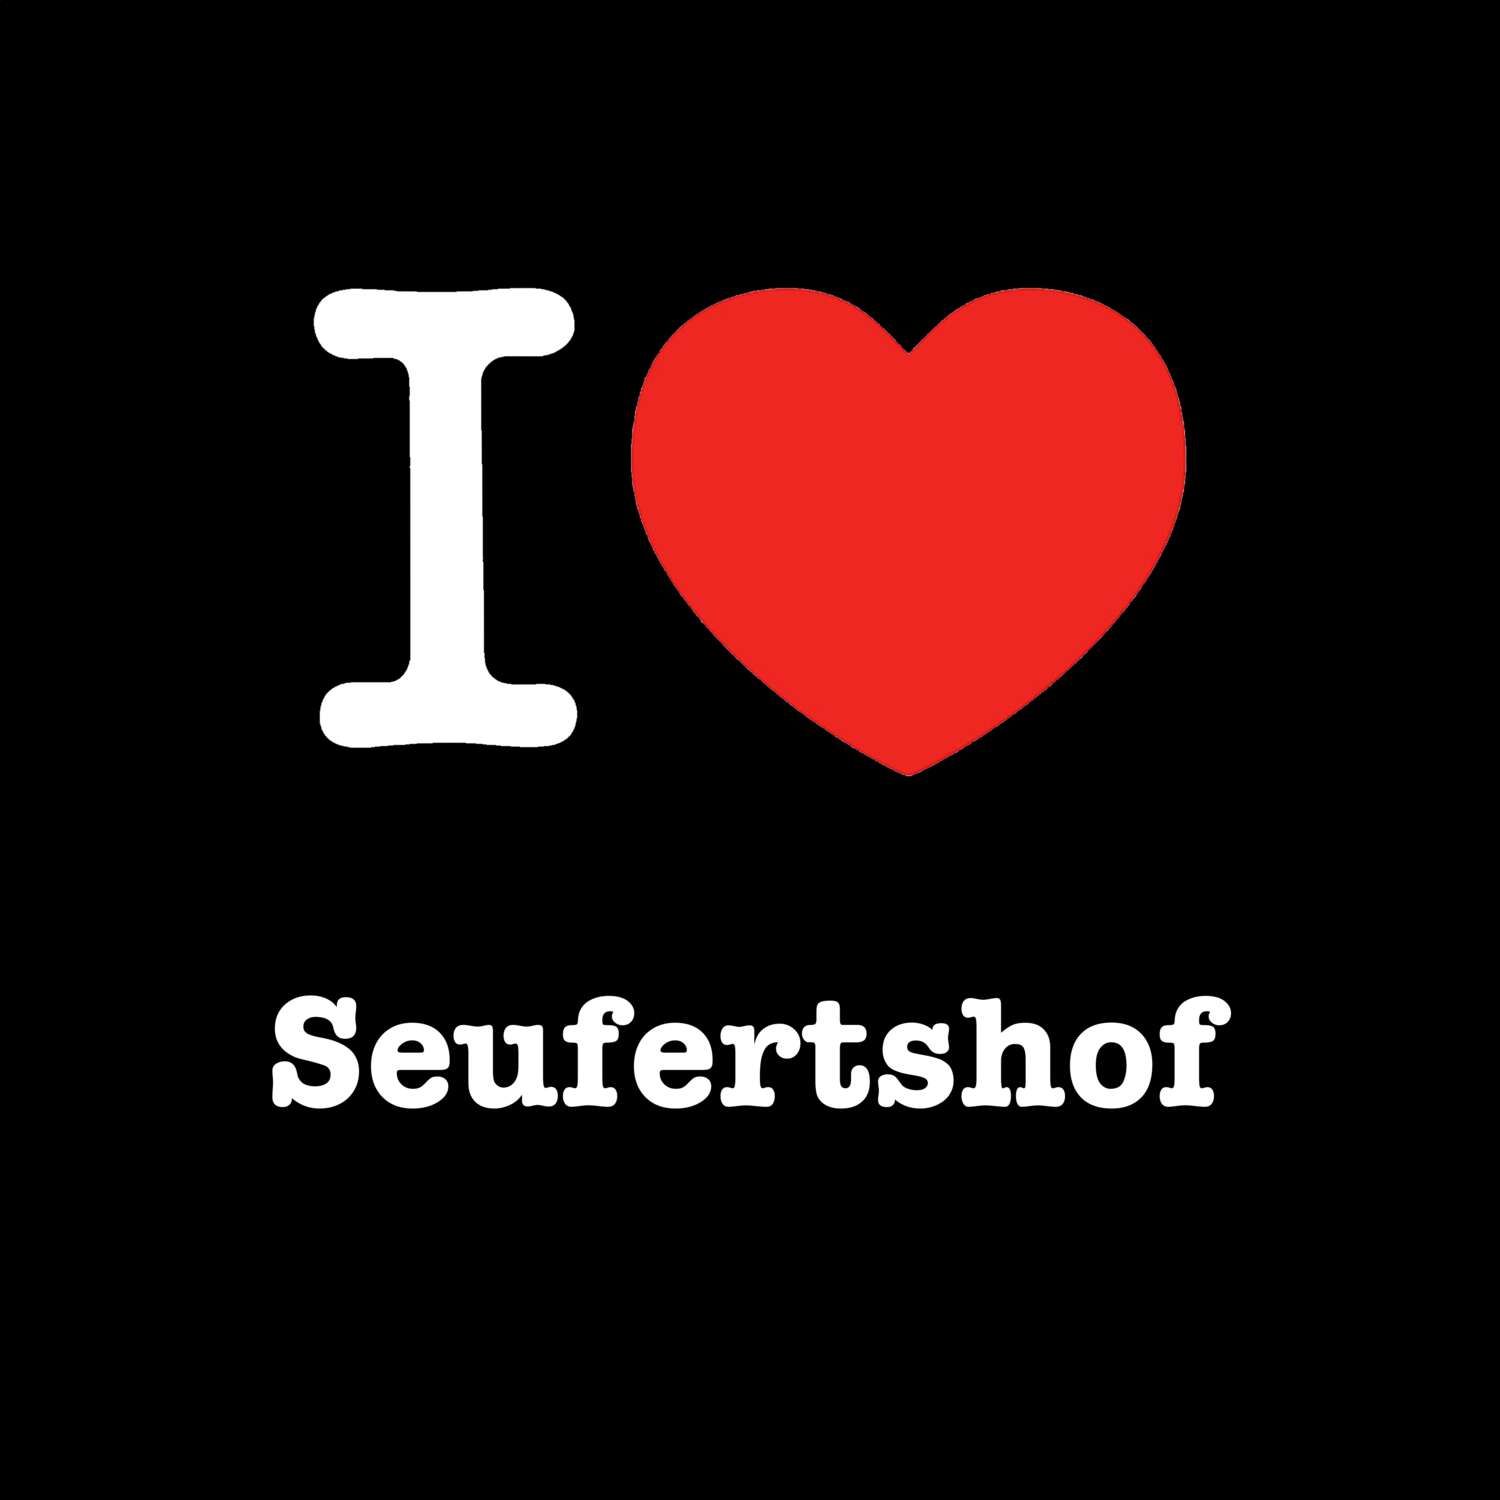 Seufertshof T-Shirt »I love«